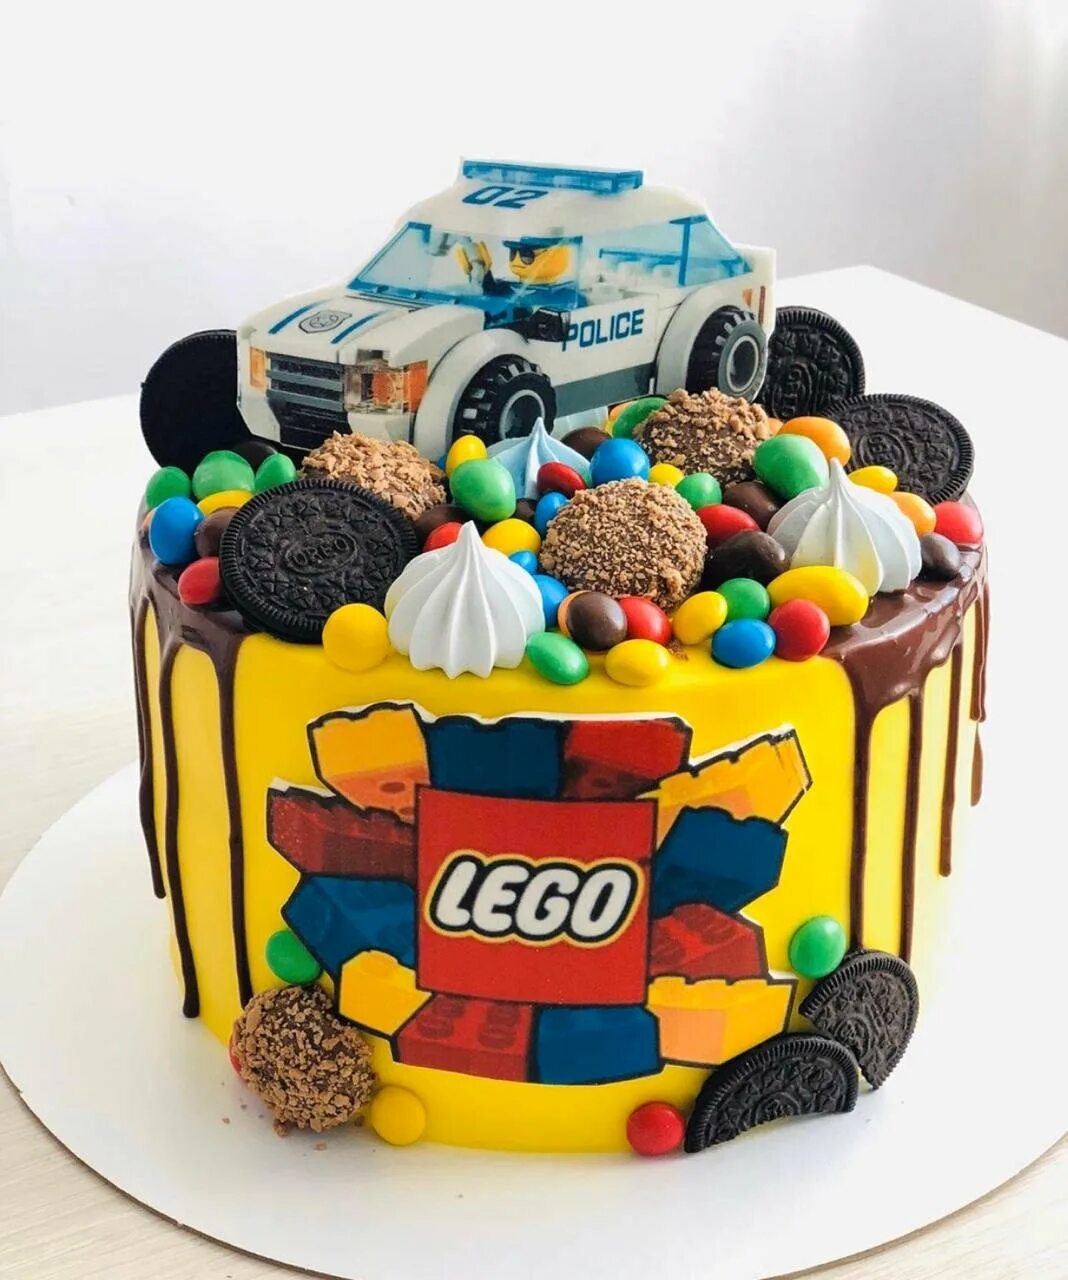 Торт для мальчика 7. Торт хот Вилс и лего. Торт LEGO Technic. Торт с машинками для мальчика. Торт лего для мальчика.